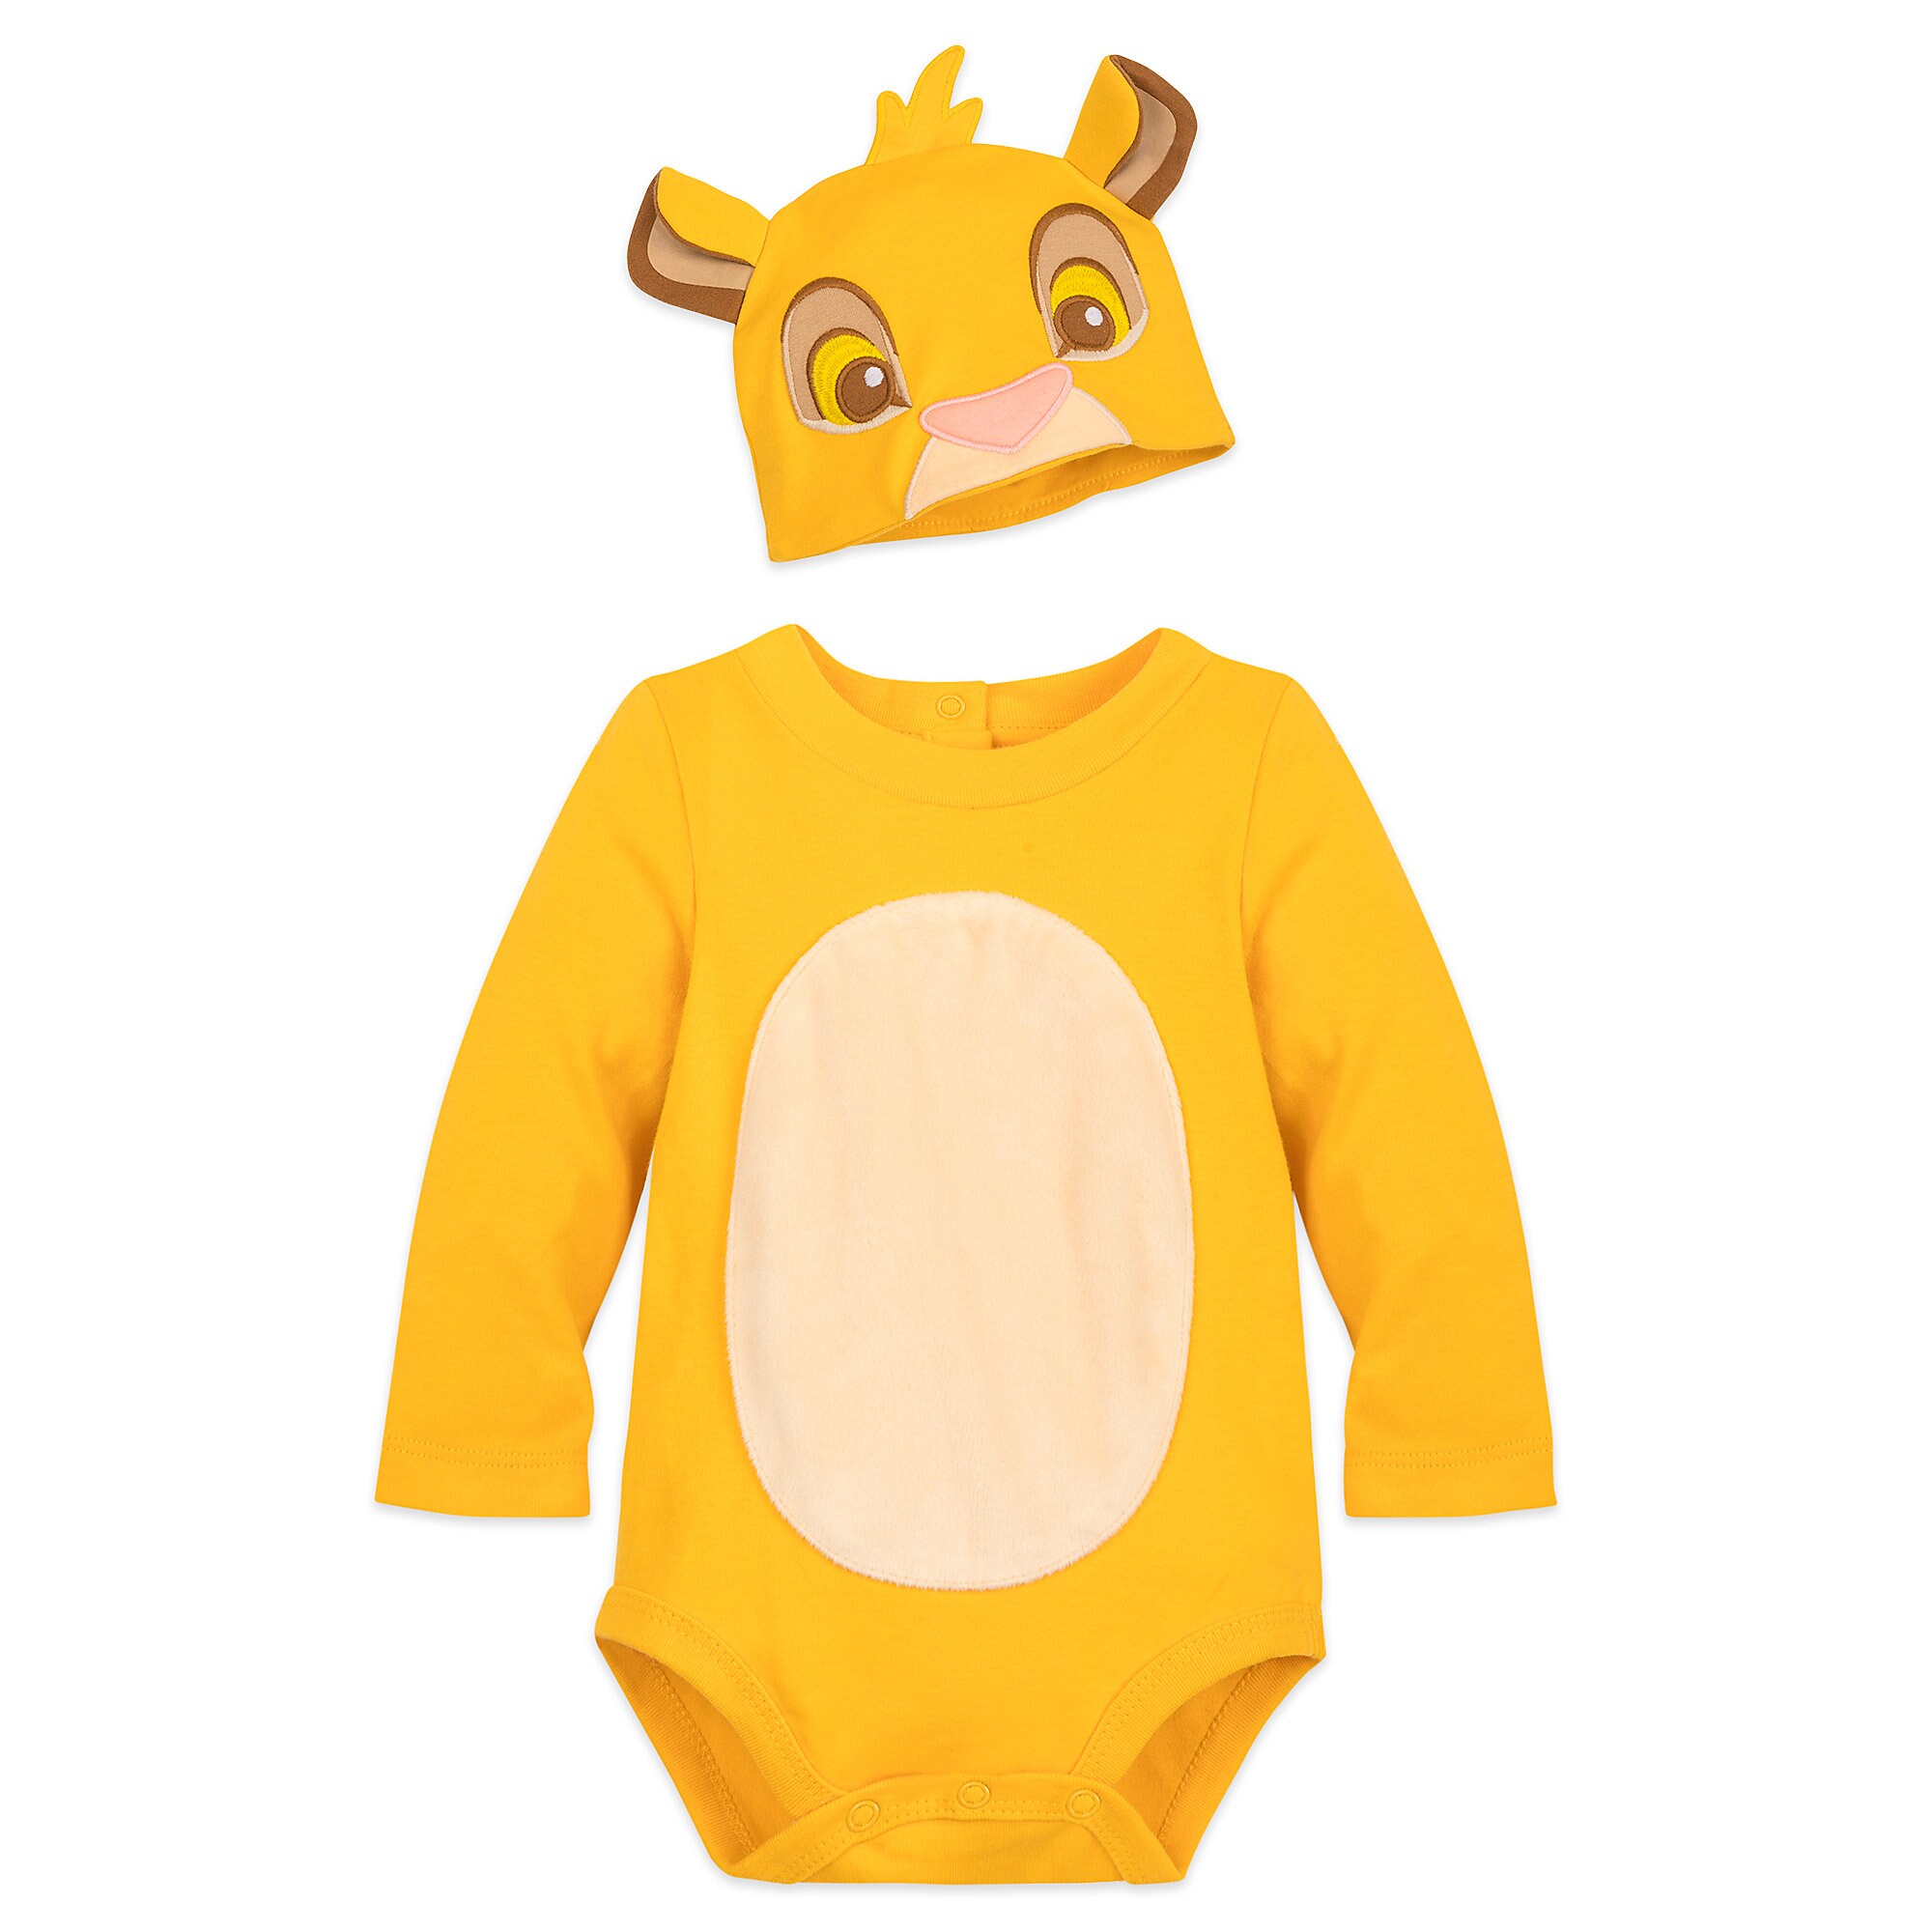 Simba Costume Bodysuit Set for Baby